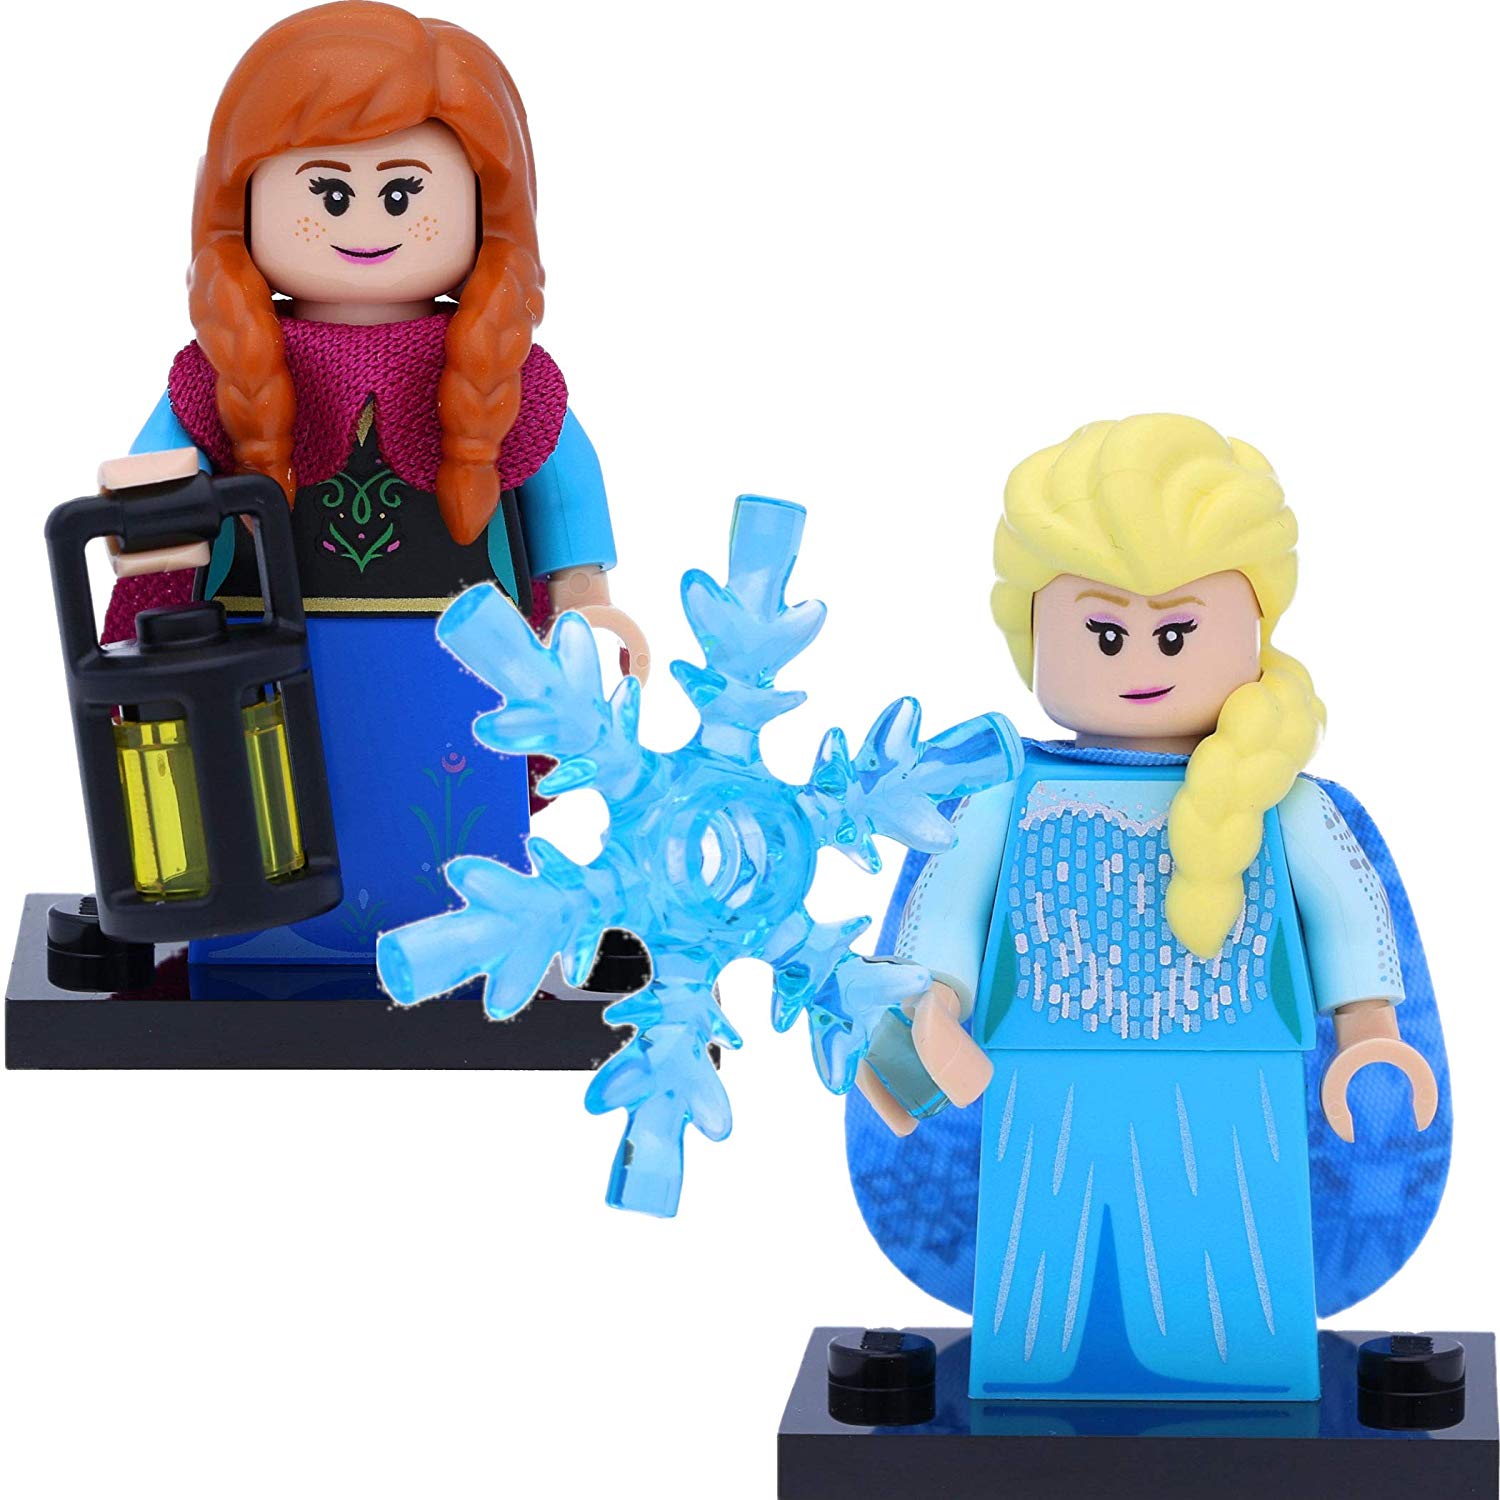 Lego 71024 Disney Series 2 Minifigures: #9 Elsa And #10 Anna (Frozen)